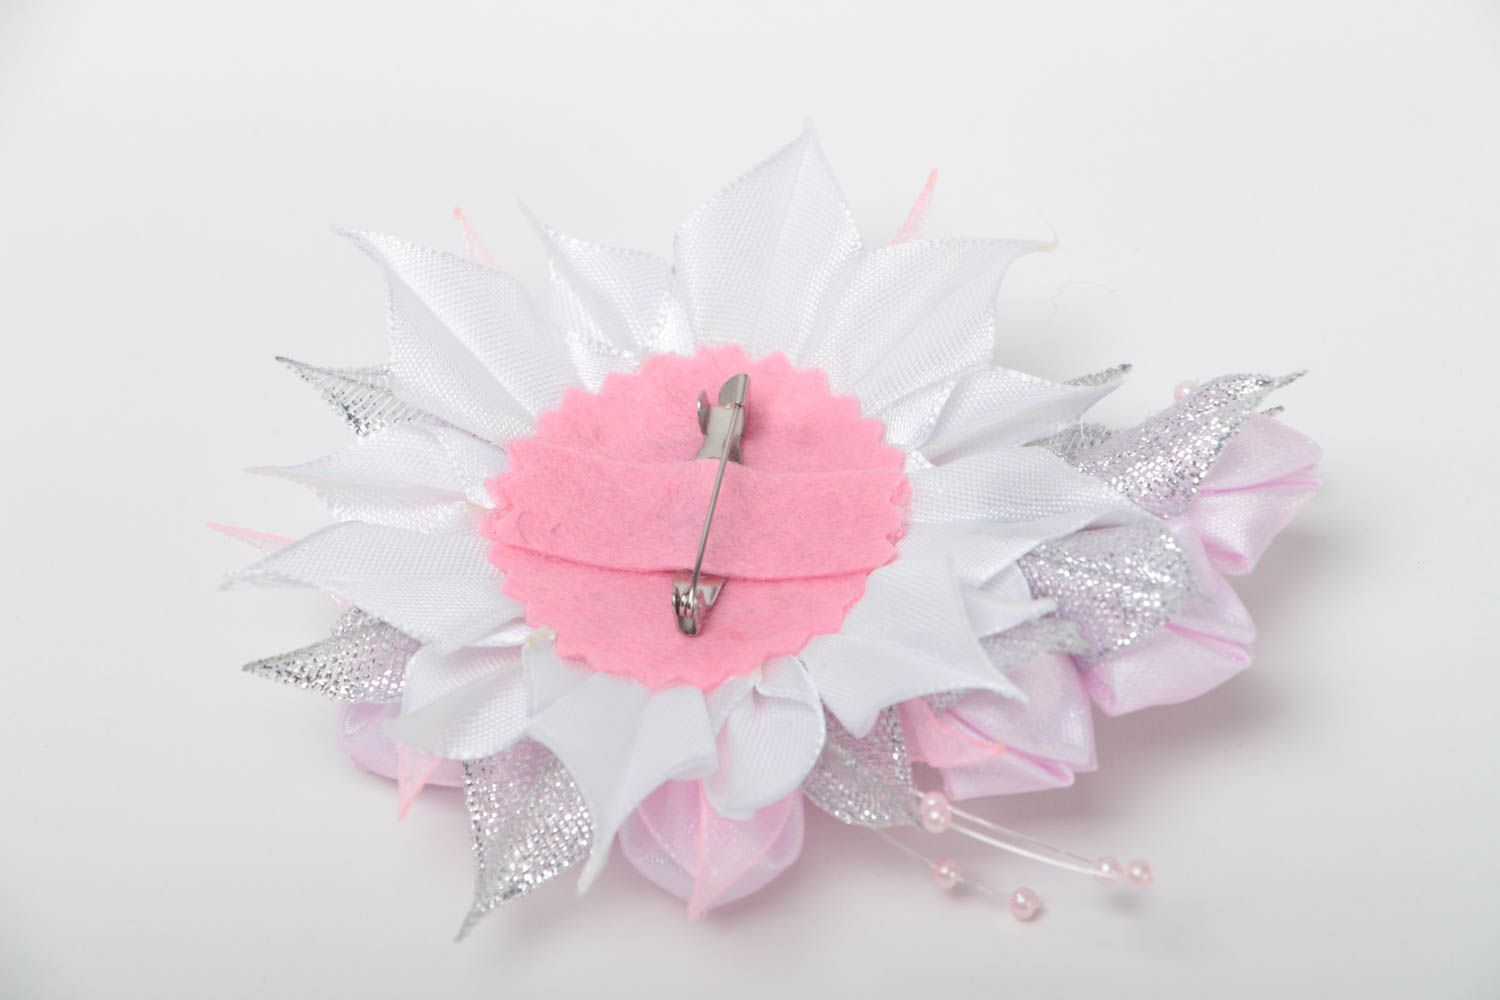 Gentle handmade flower brooch textile floristry fashion accessories gift ideas photo 4